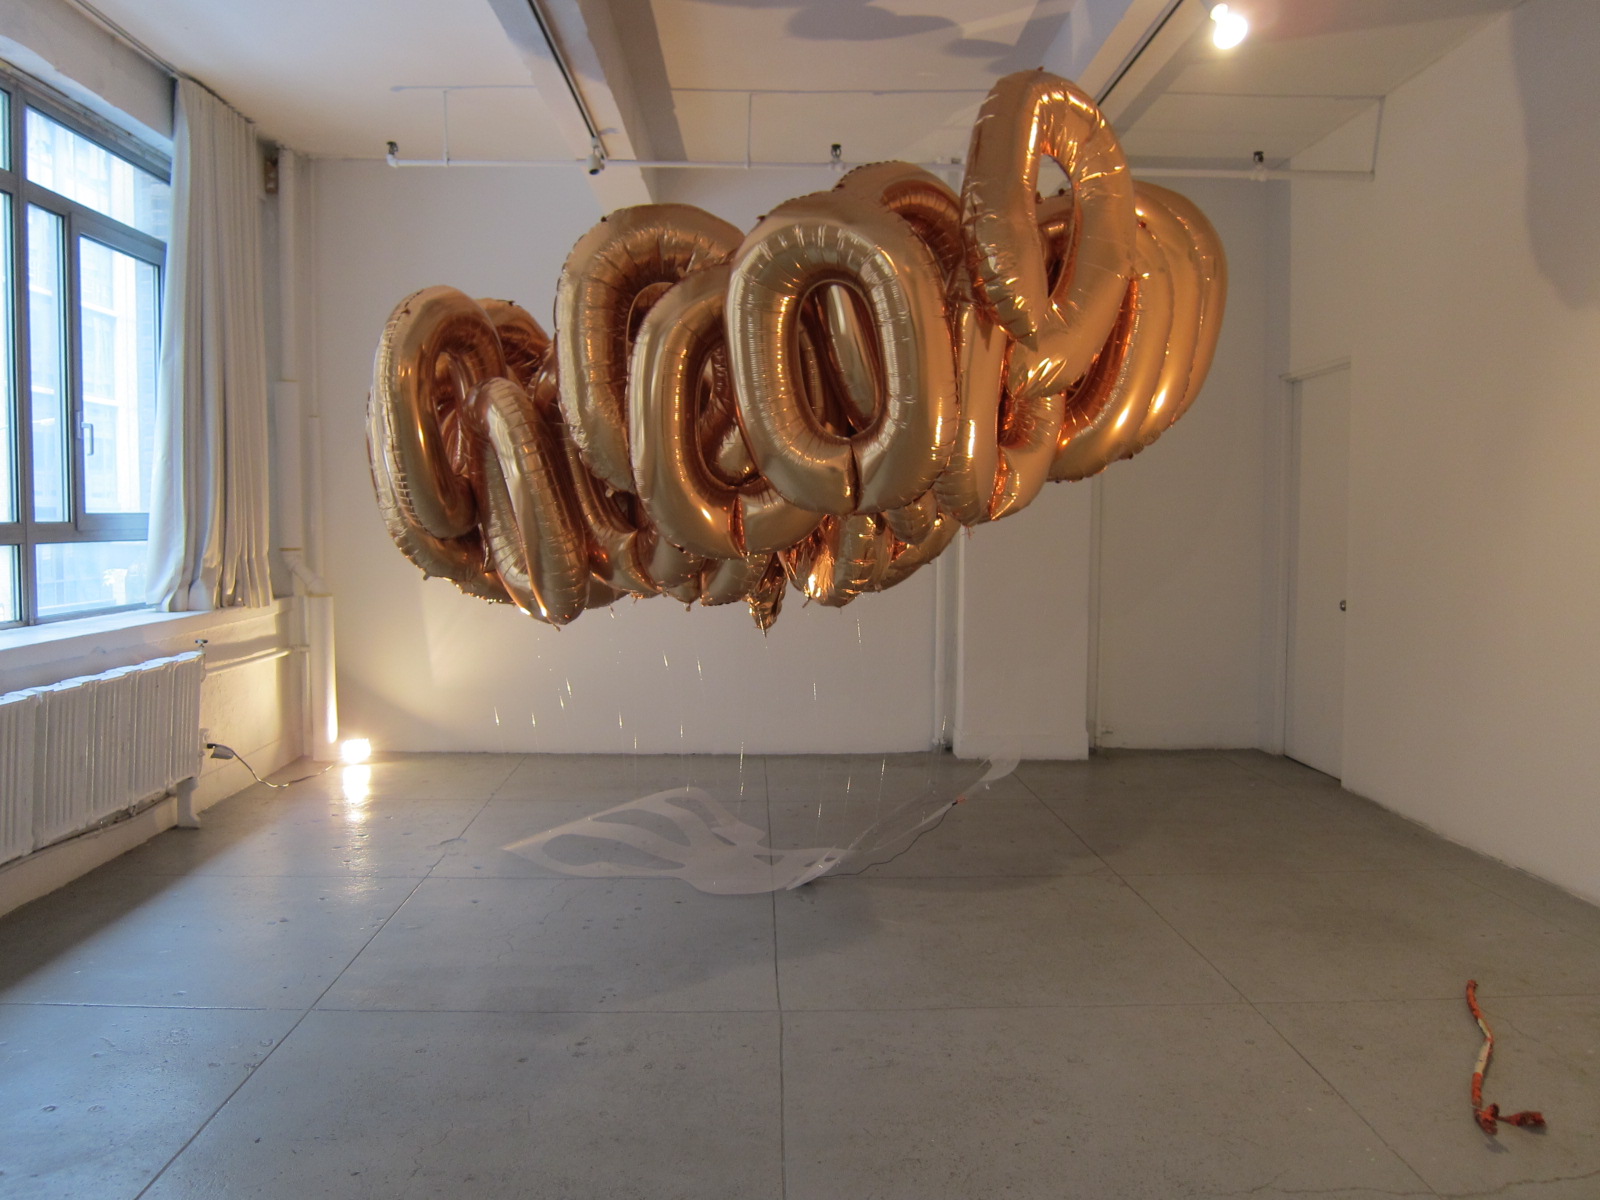   Mitch McEwen,   Levitating State Secrets , 2014. Polycarbonate balloons, helium, electronics. 